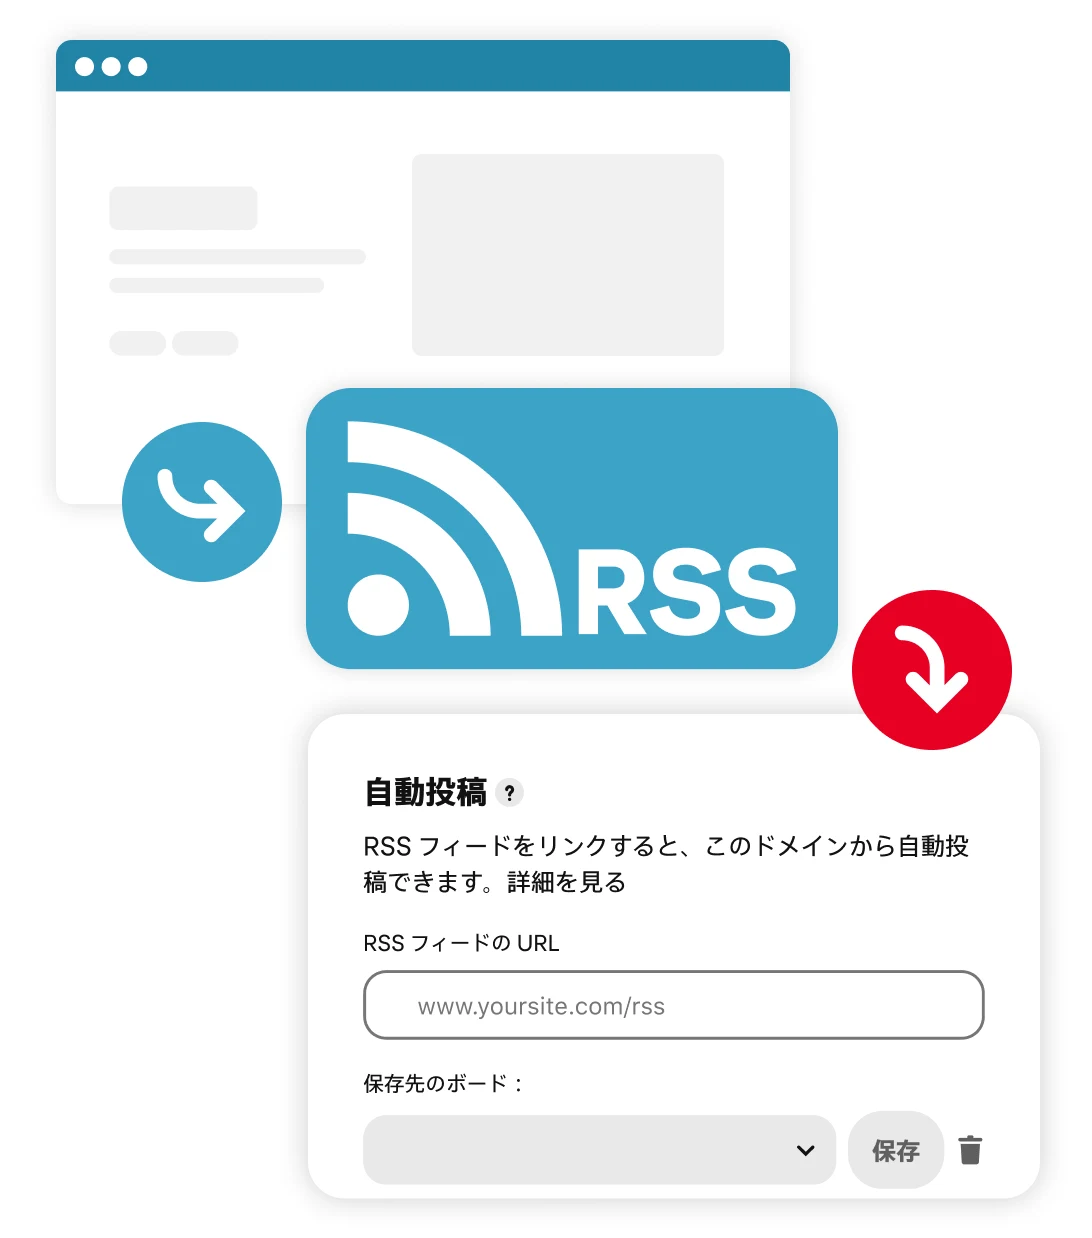 RSS フィードから Pinterest 自動公開へのフローを示す図。